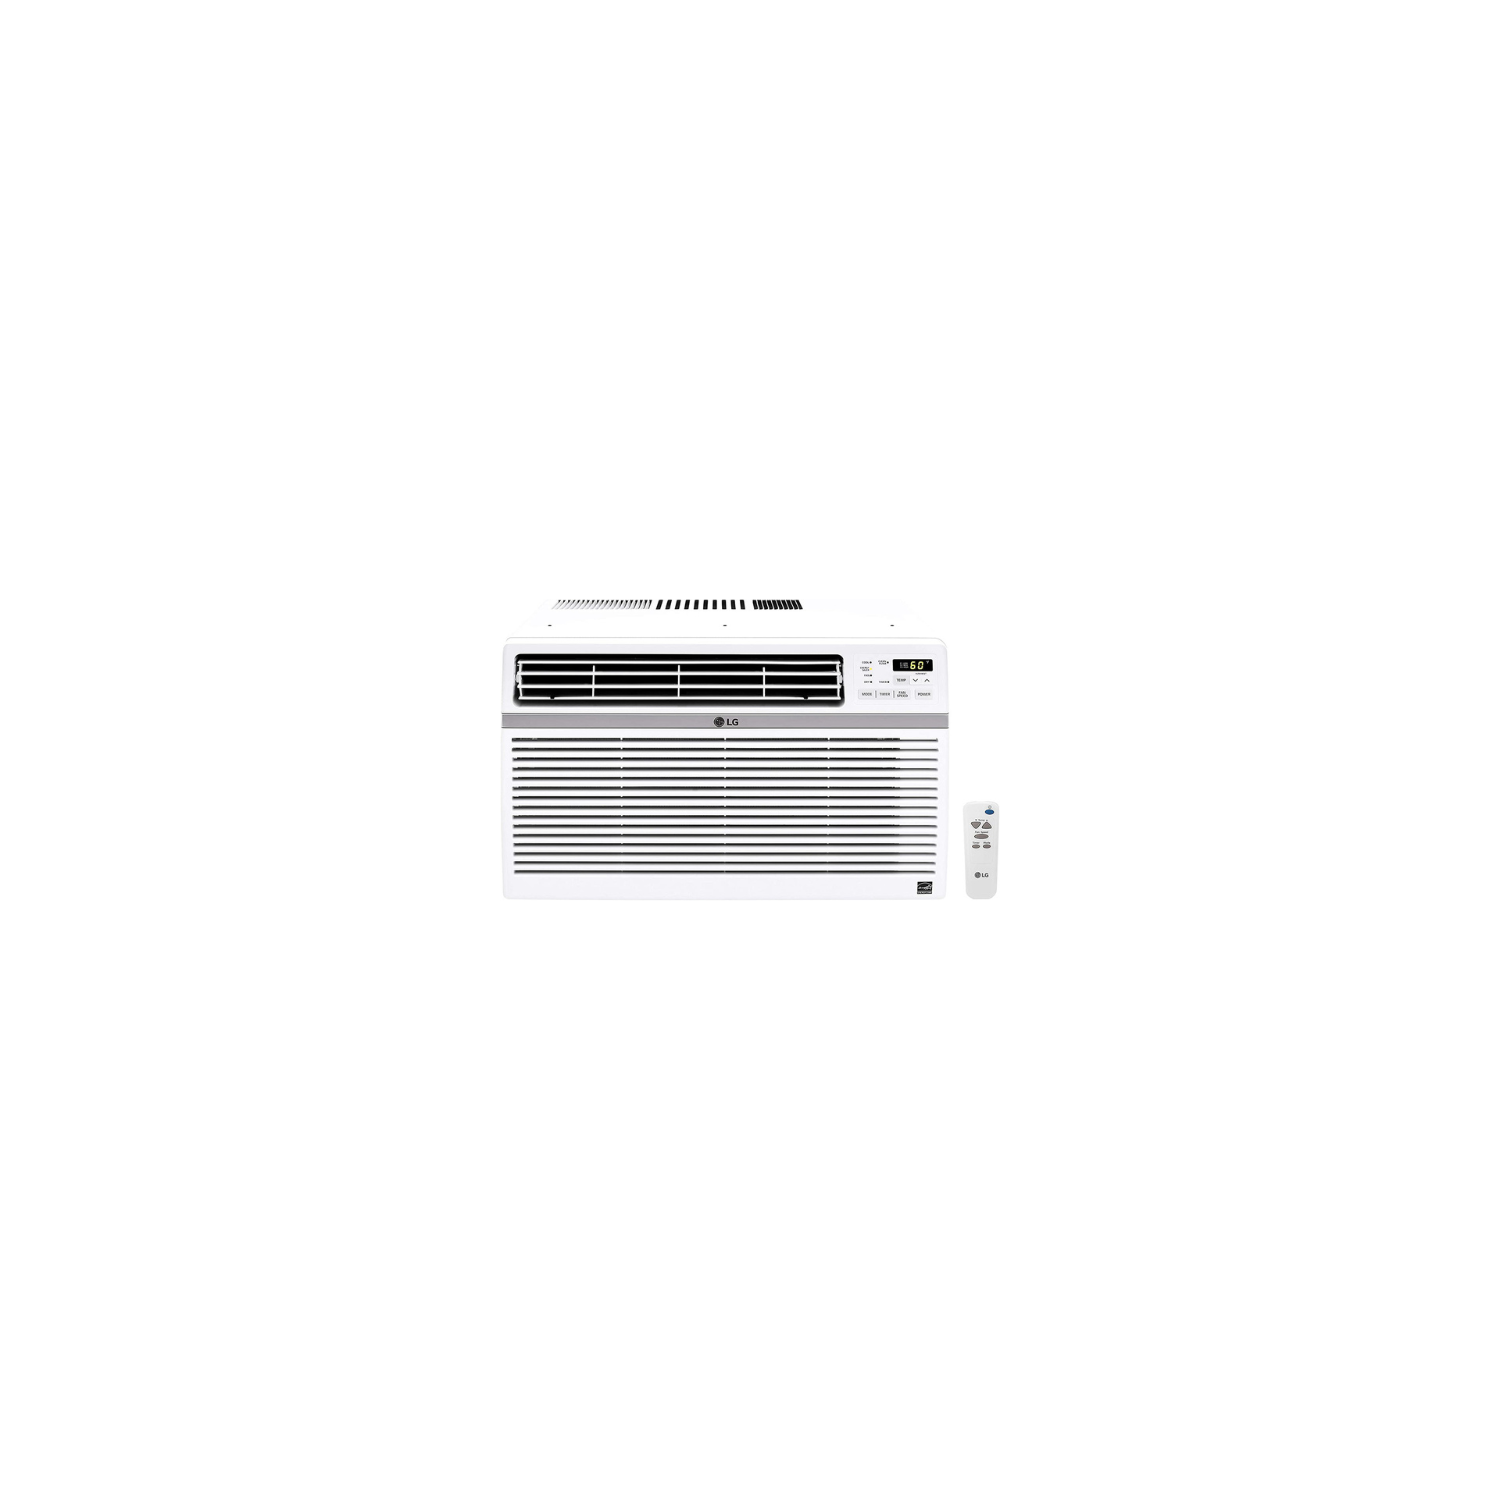 LG LW1216ER Window-Mounted AIR Conditioner with Remote Control, 12,000 BTU 115V